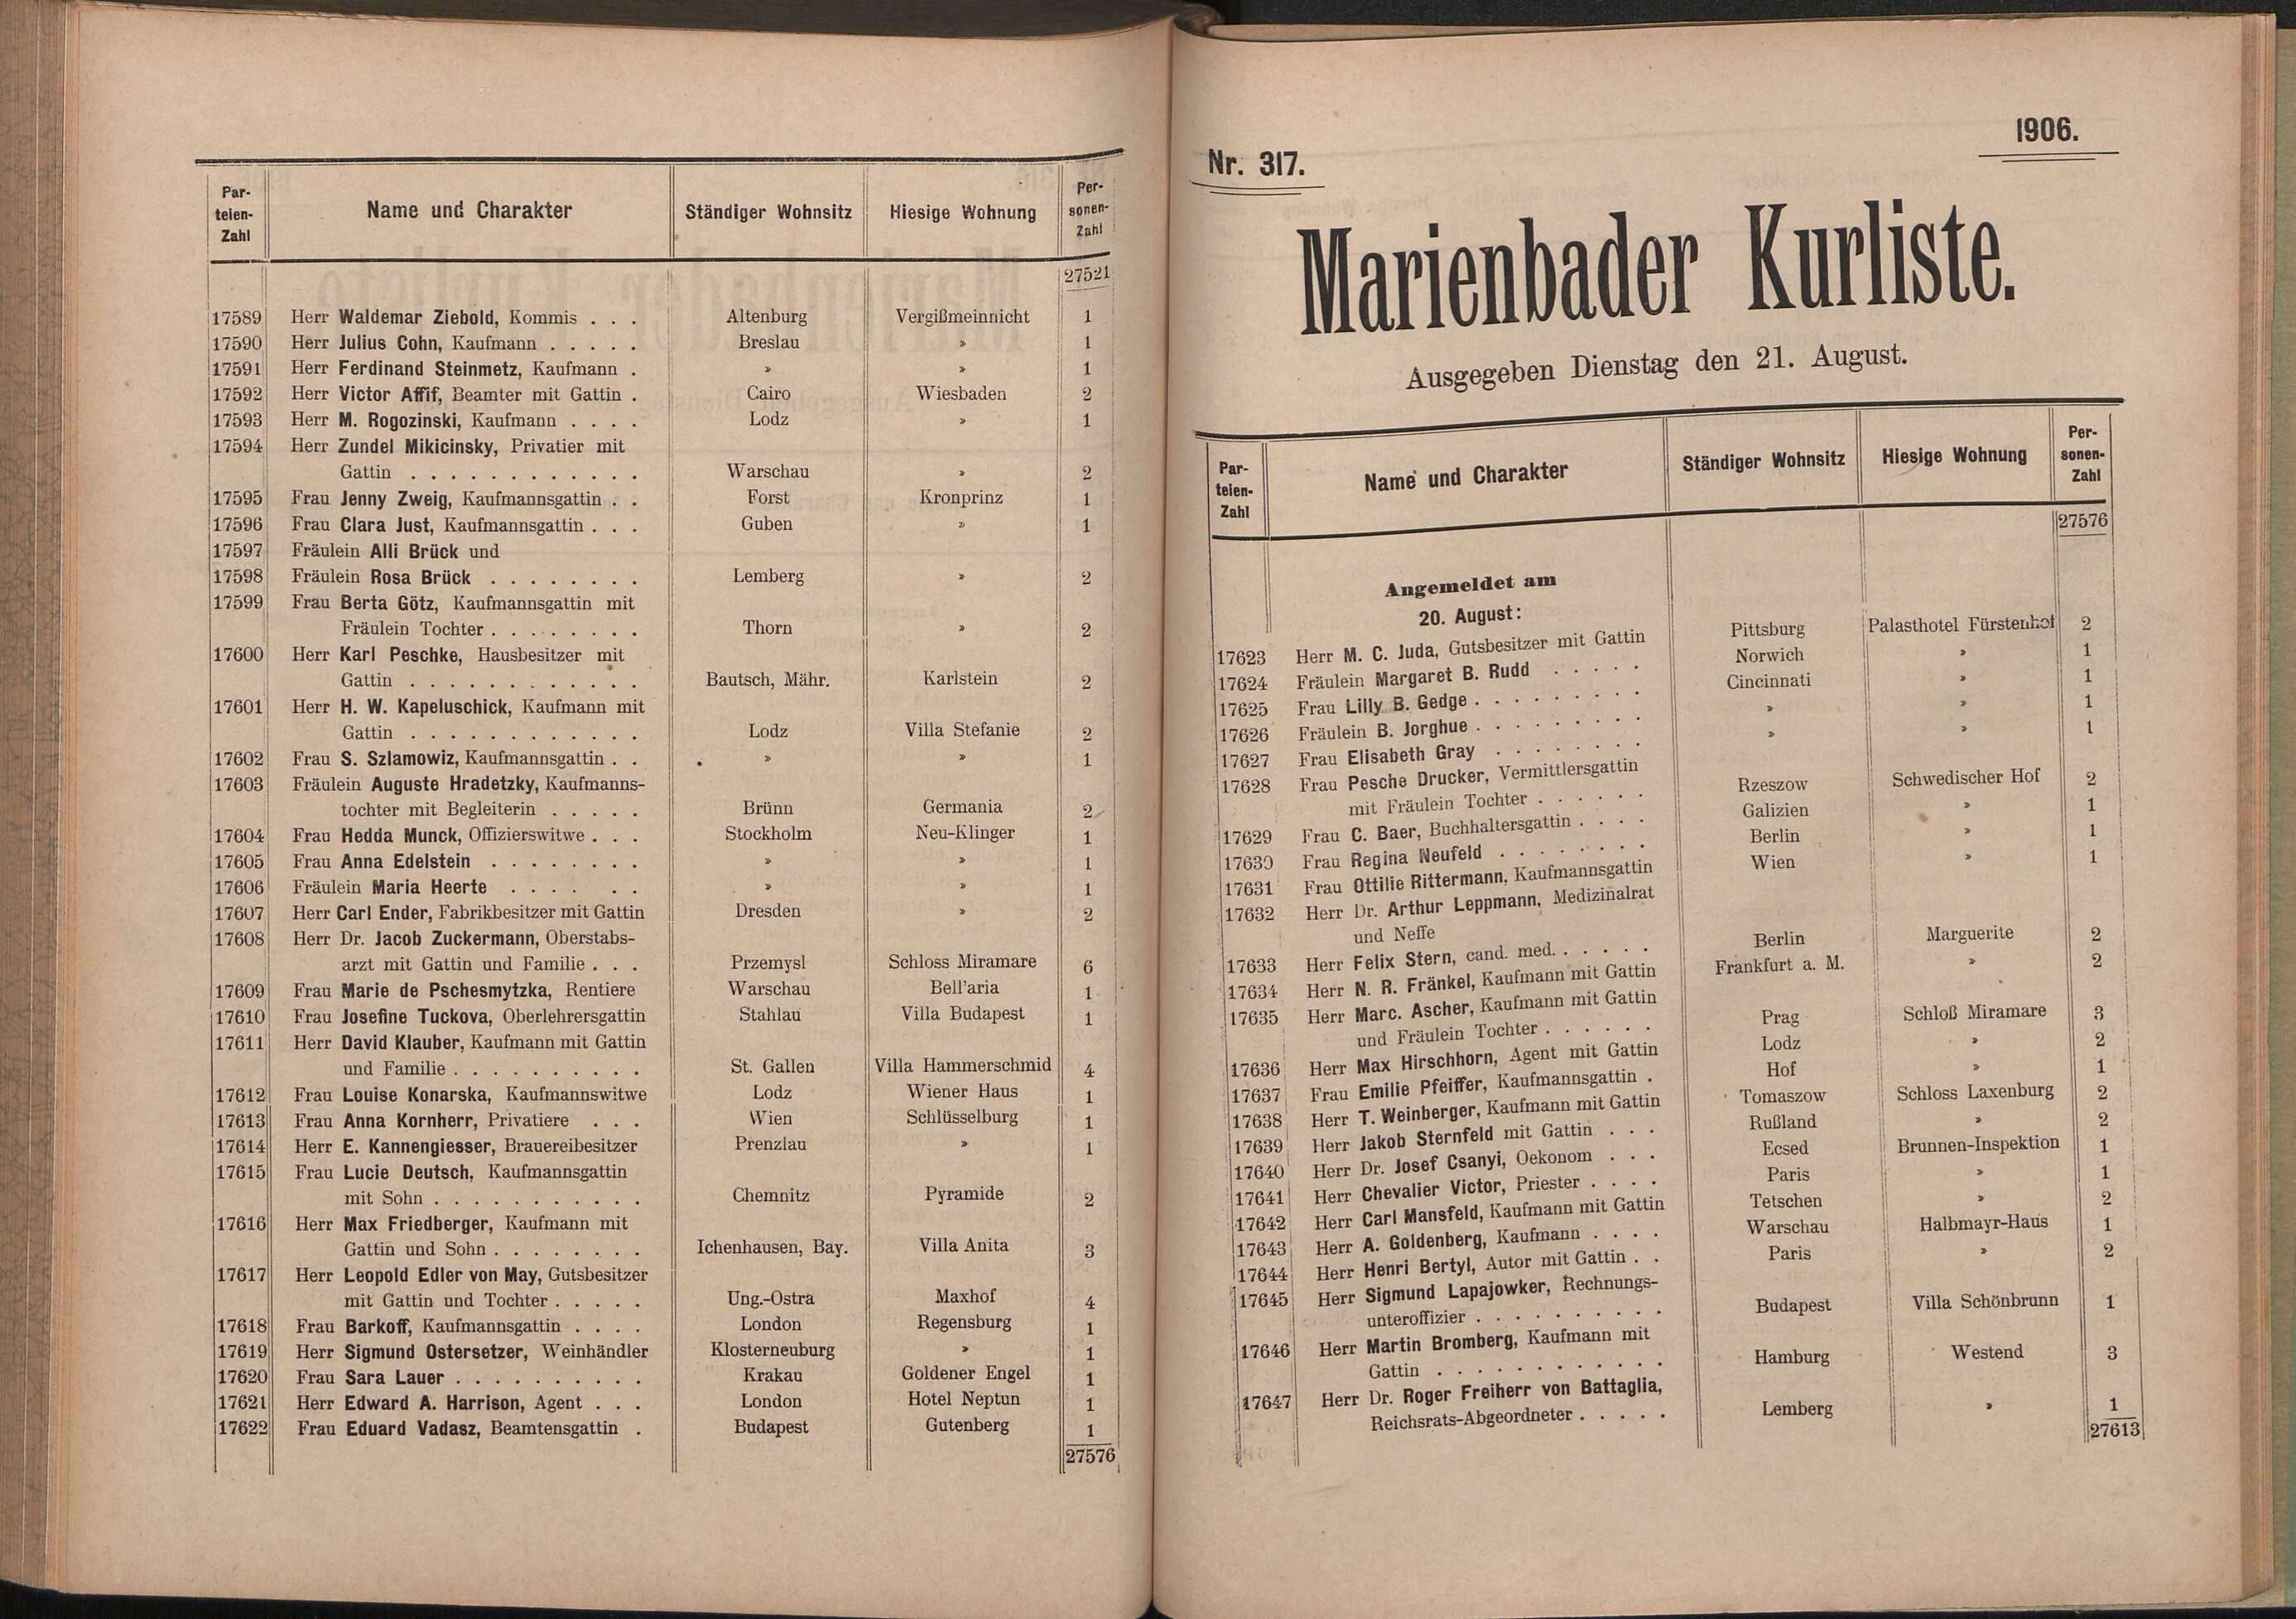 396. soap-ch_knihovna_marienbader-kurliste-1906_3960